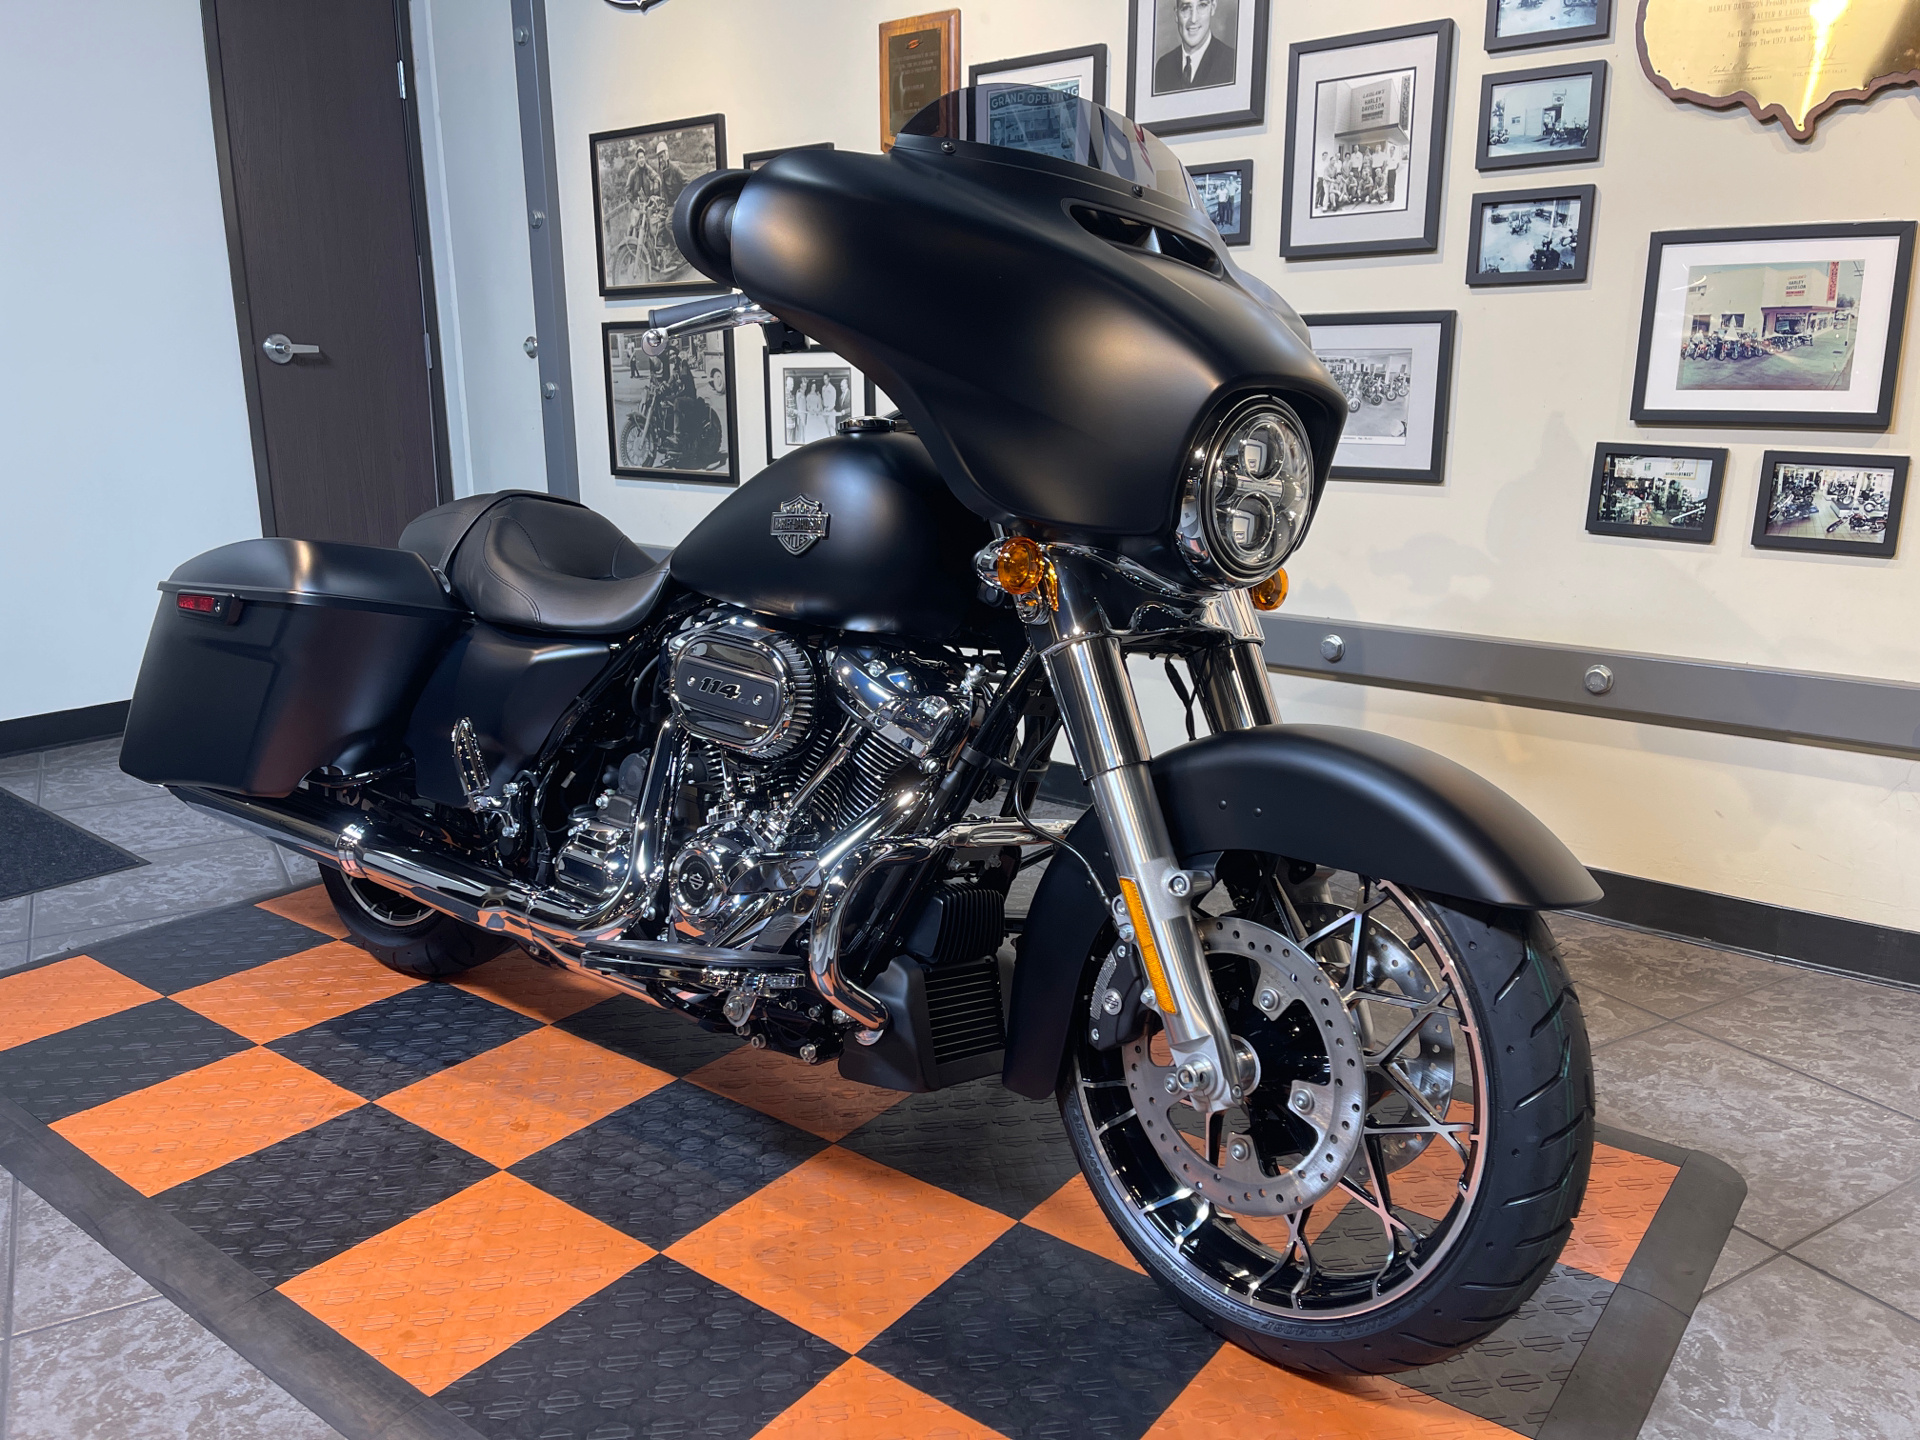 2022 Harley-Davidson Street Glide® Special in Baldwin Park, California - Photo 2